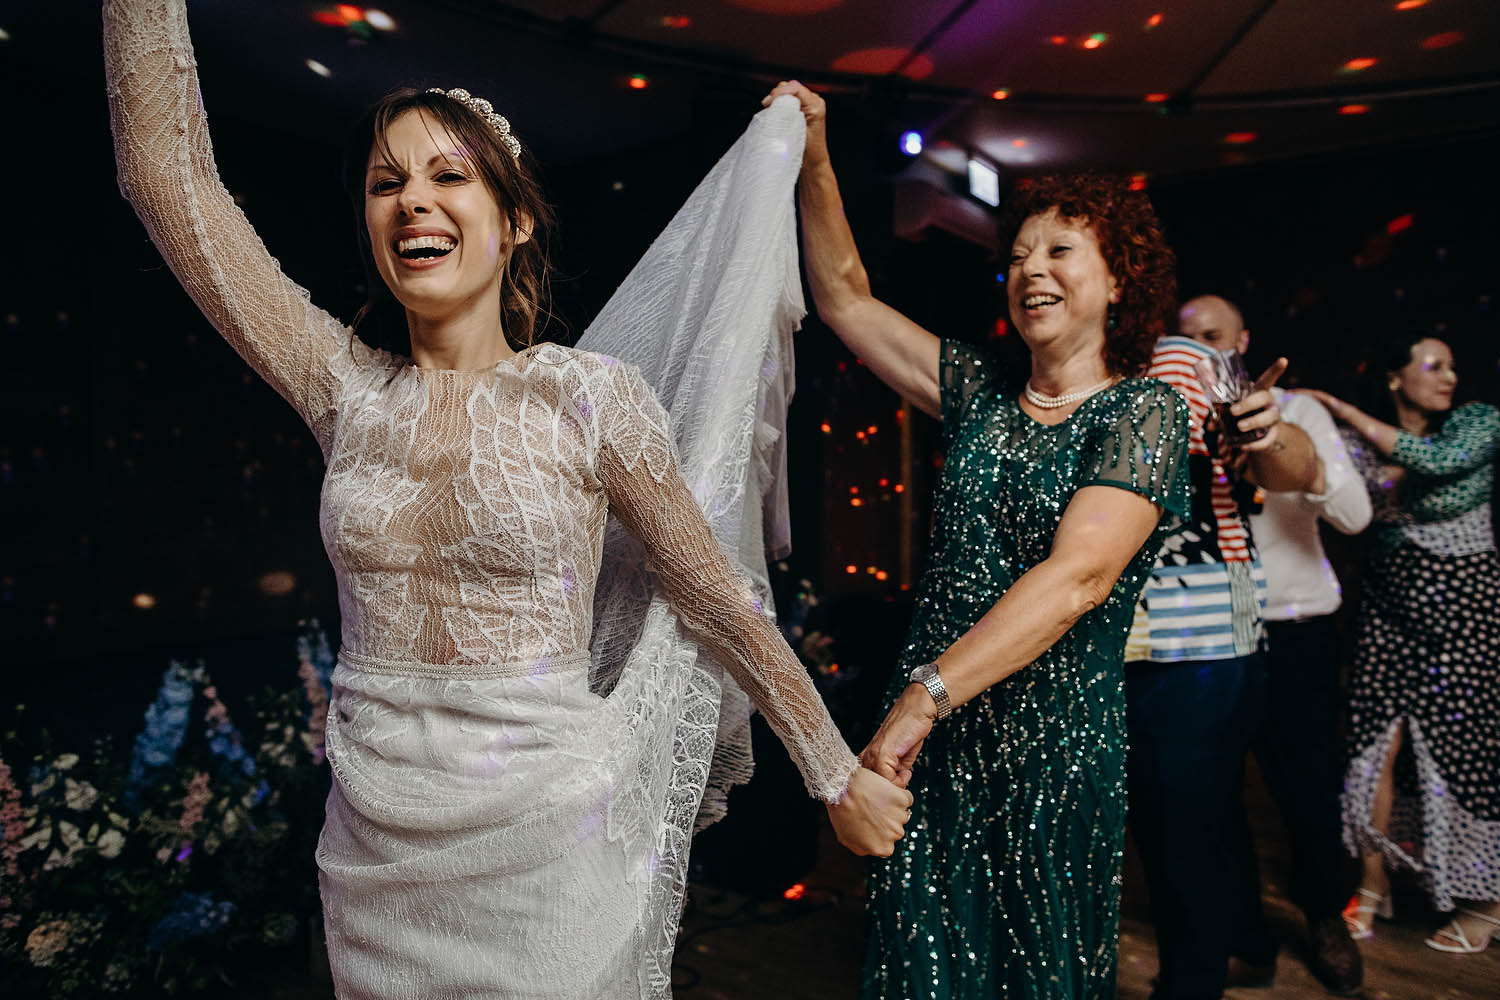 bride leads dance indoors